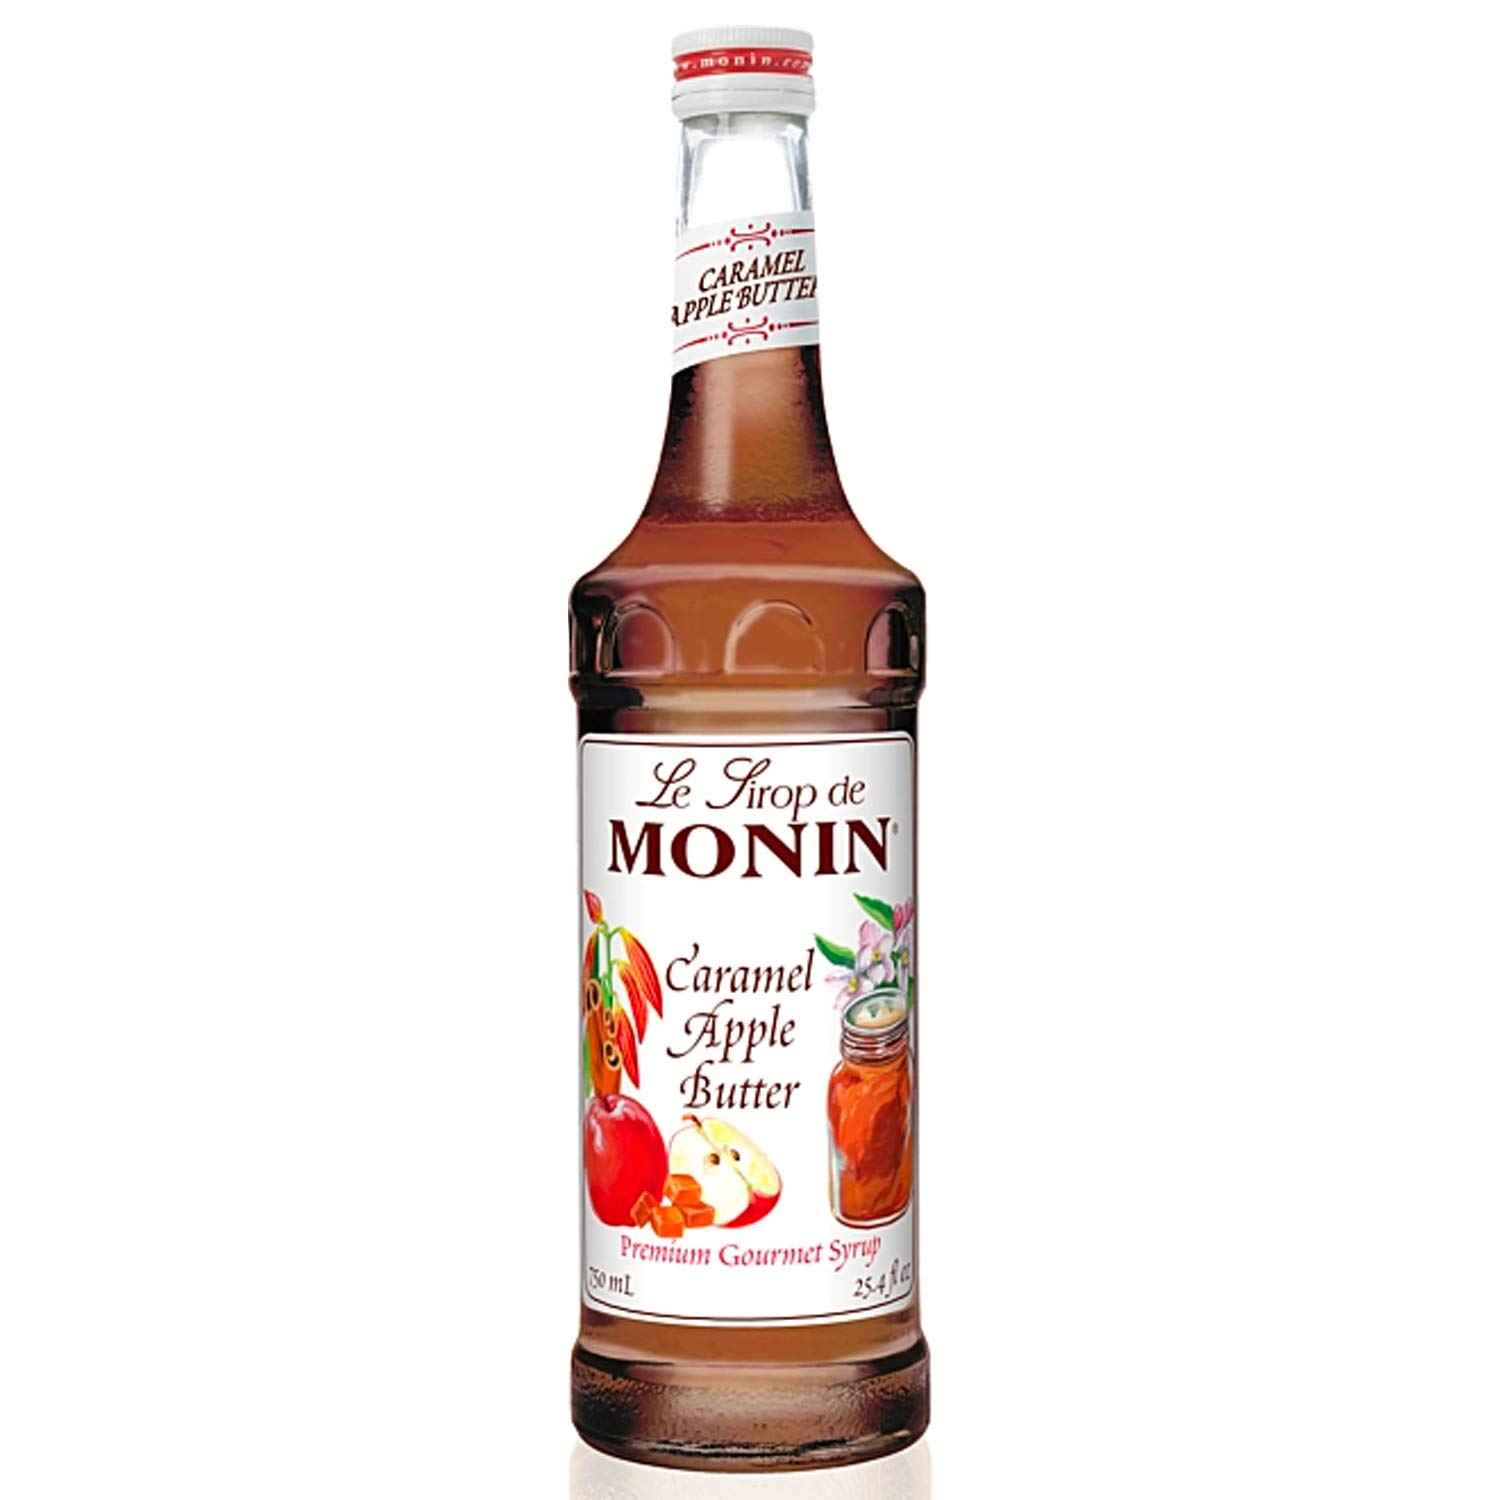 MONIN Premium Gomme Syrup 1 Litre (6 pack)